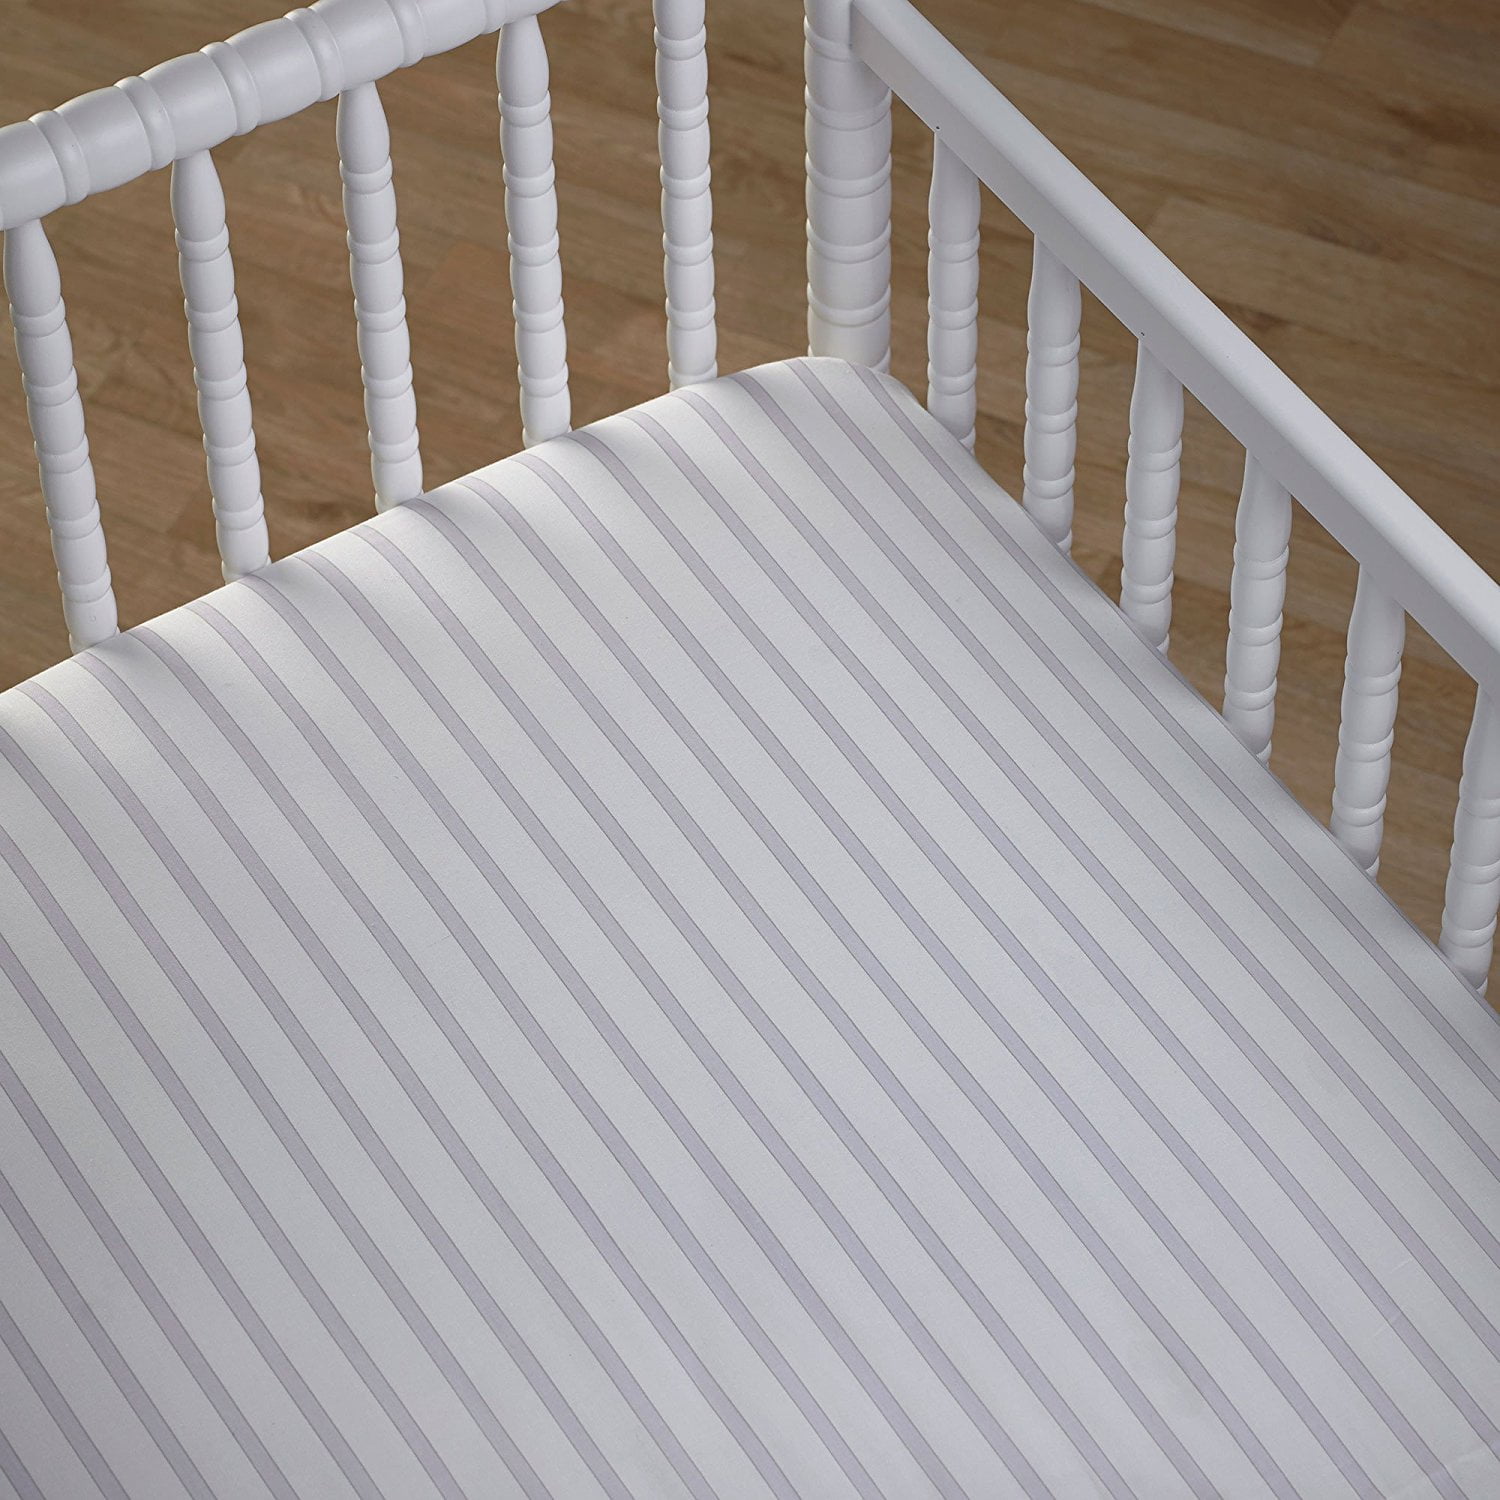 striped crib sheet